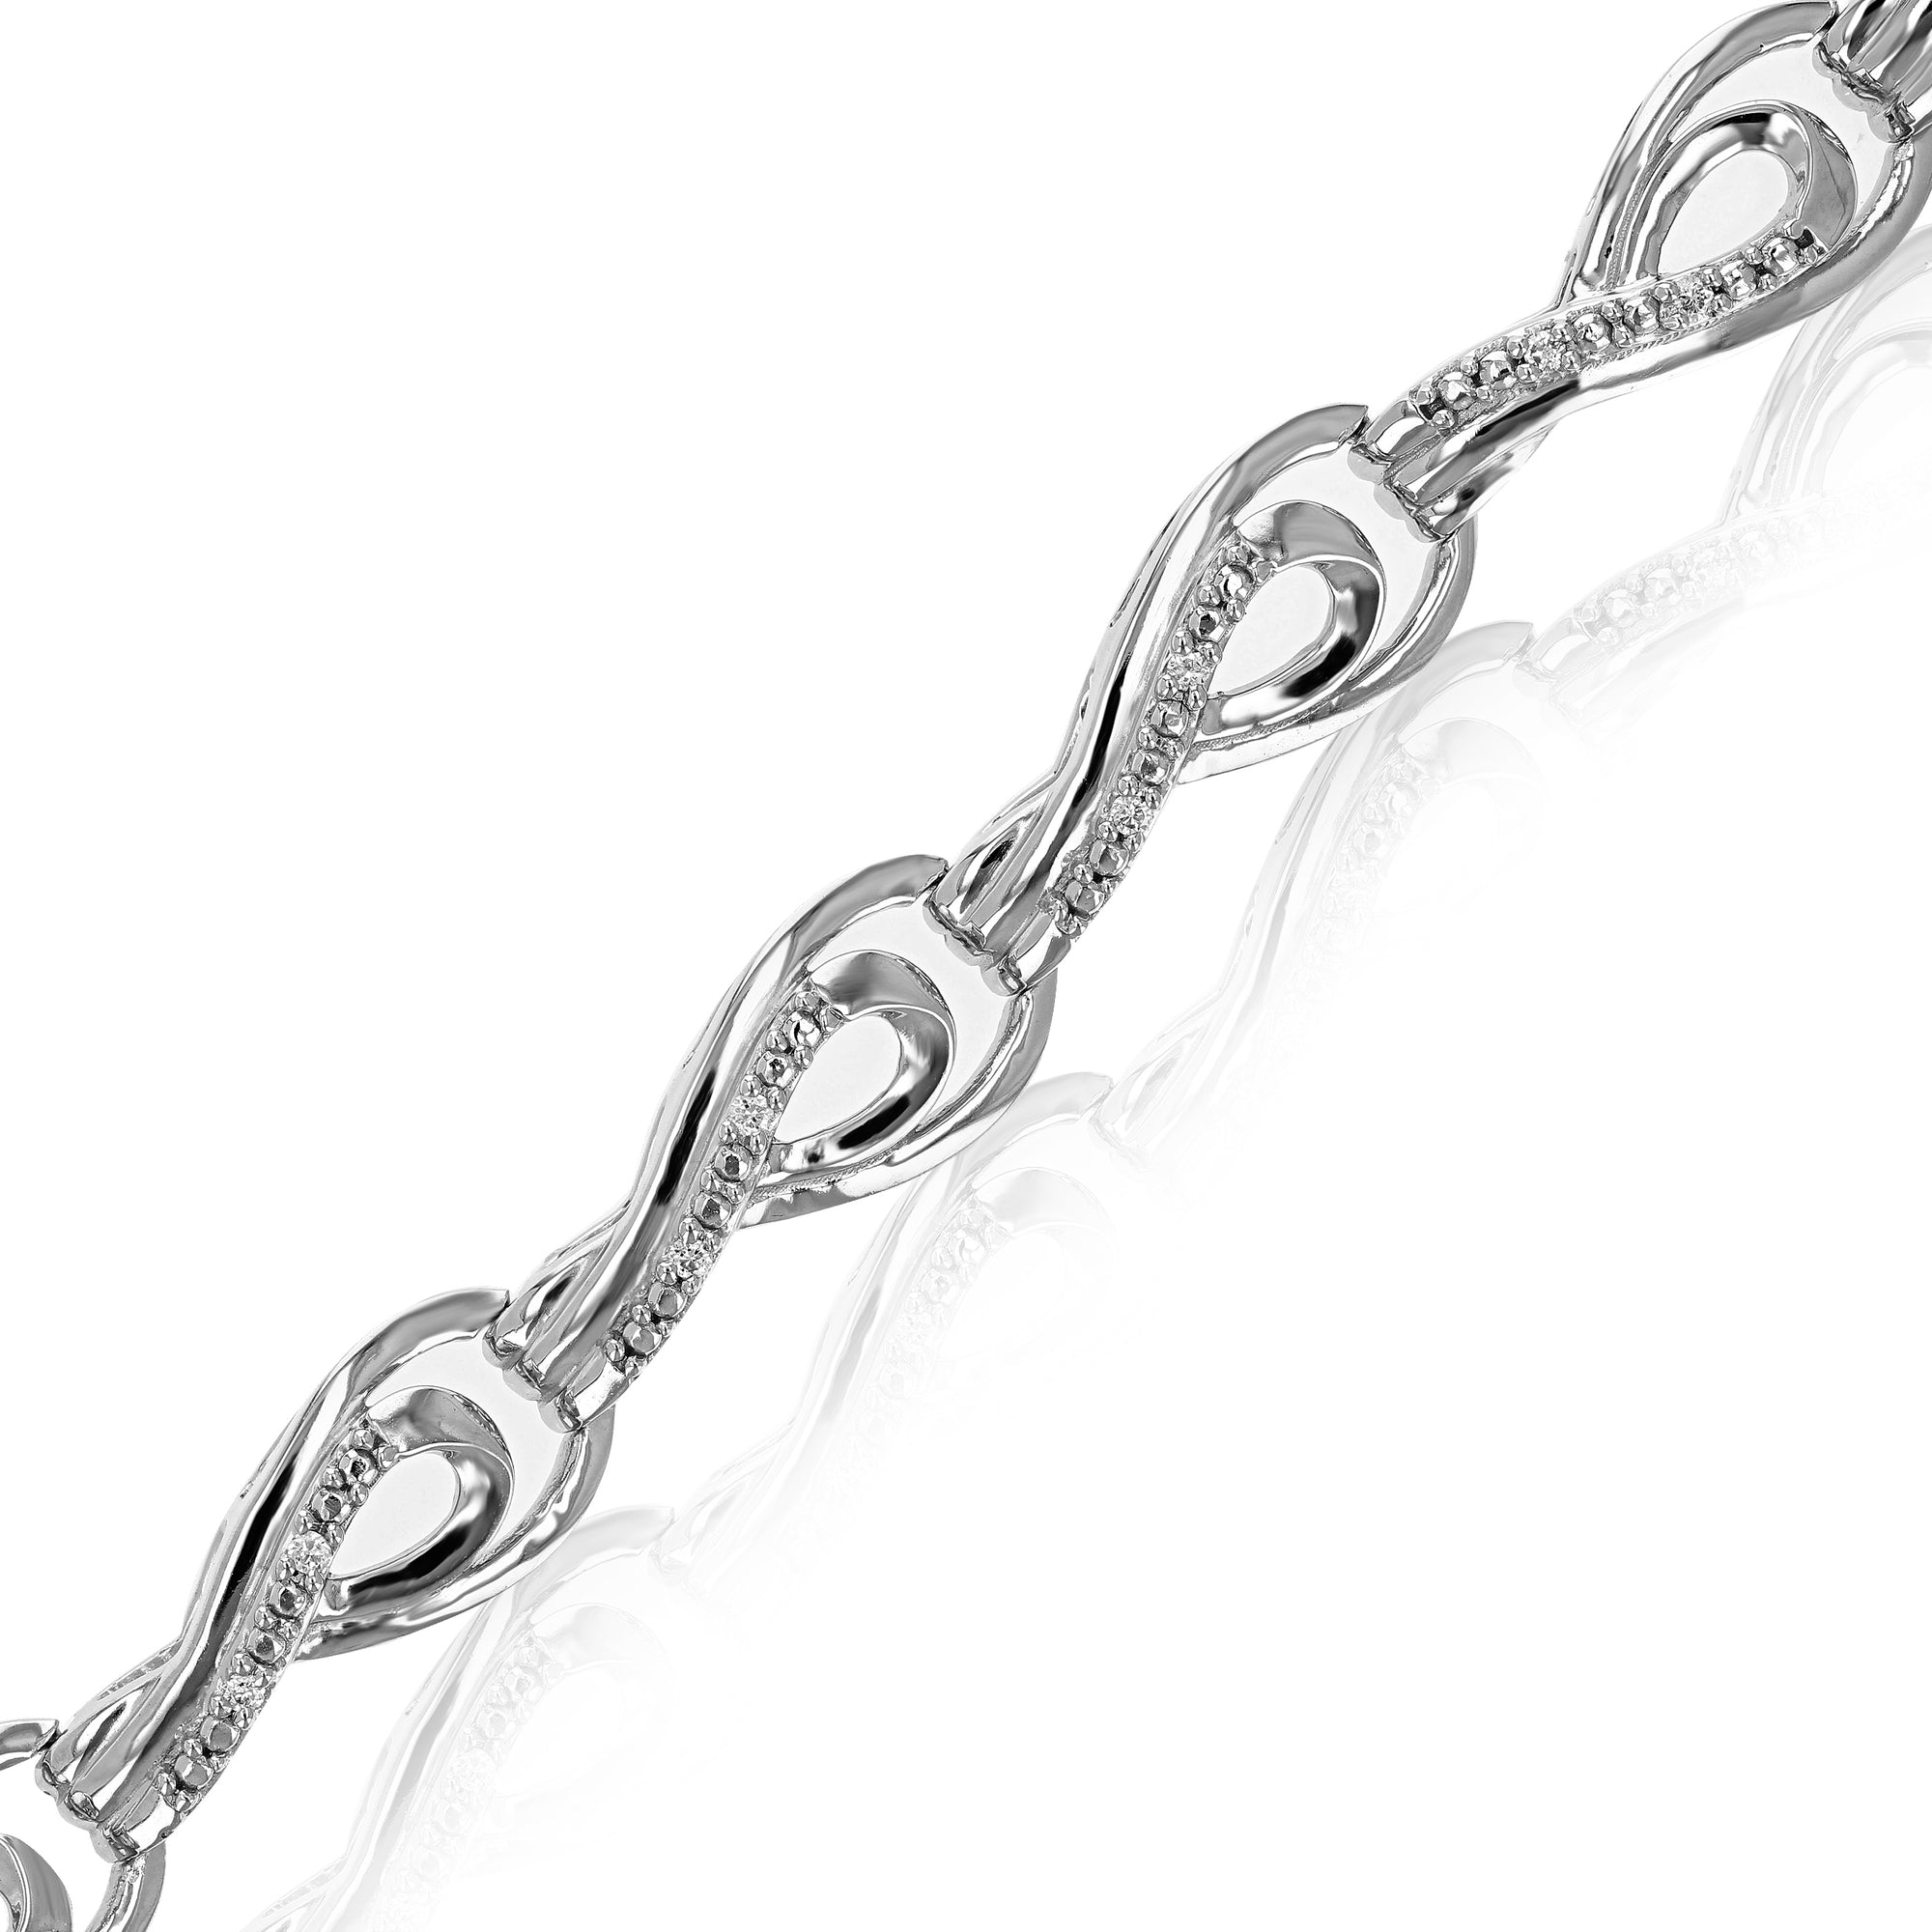 1/8 cttw Diamond Bracelet for Women, Round Lab Grown Diamond Bracelet in .925 Sterling Silver, Prong Setting, 7.25 Inch